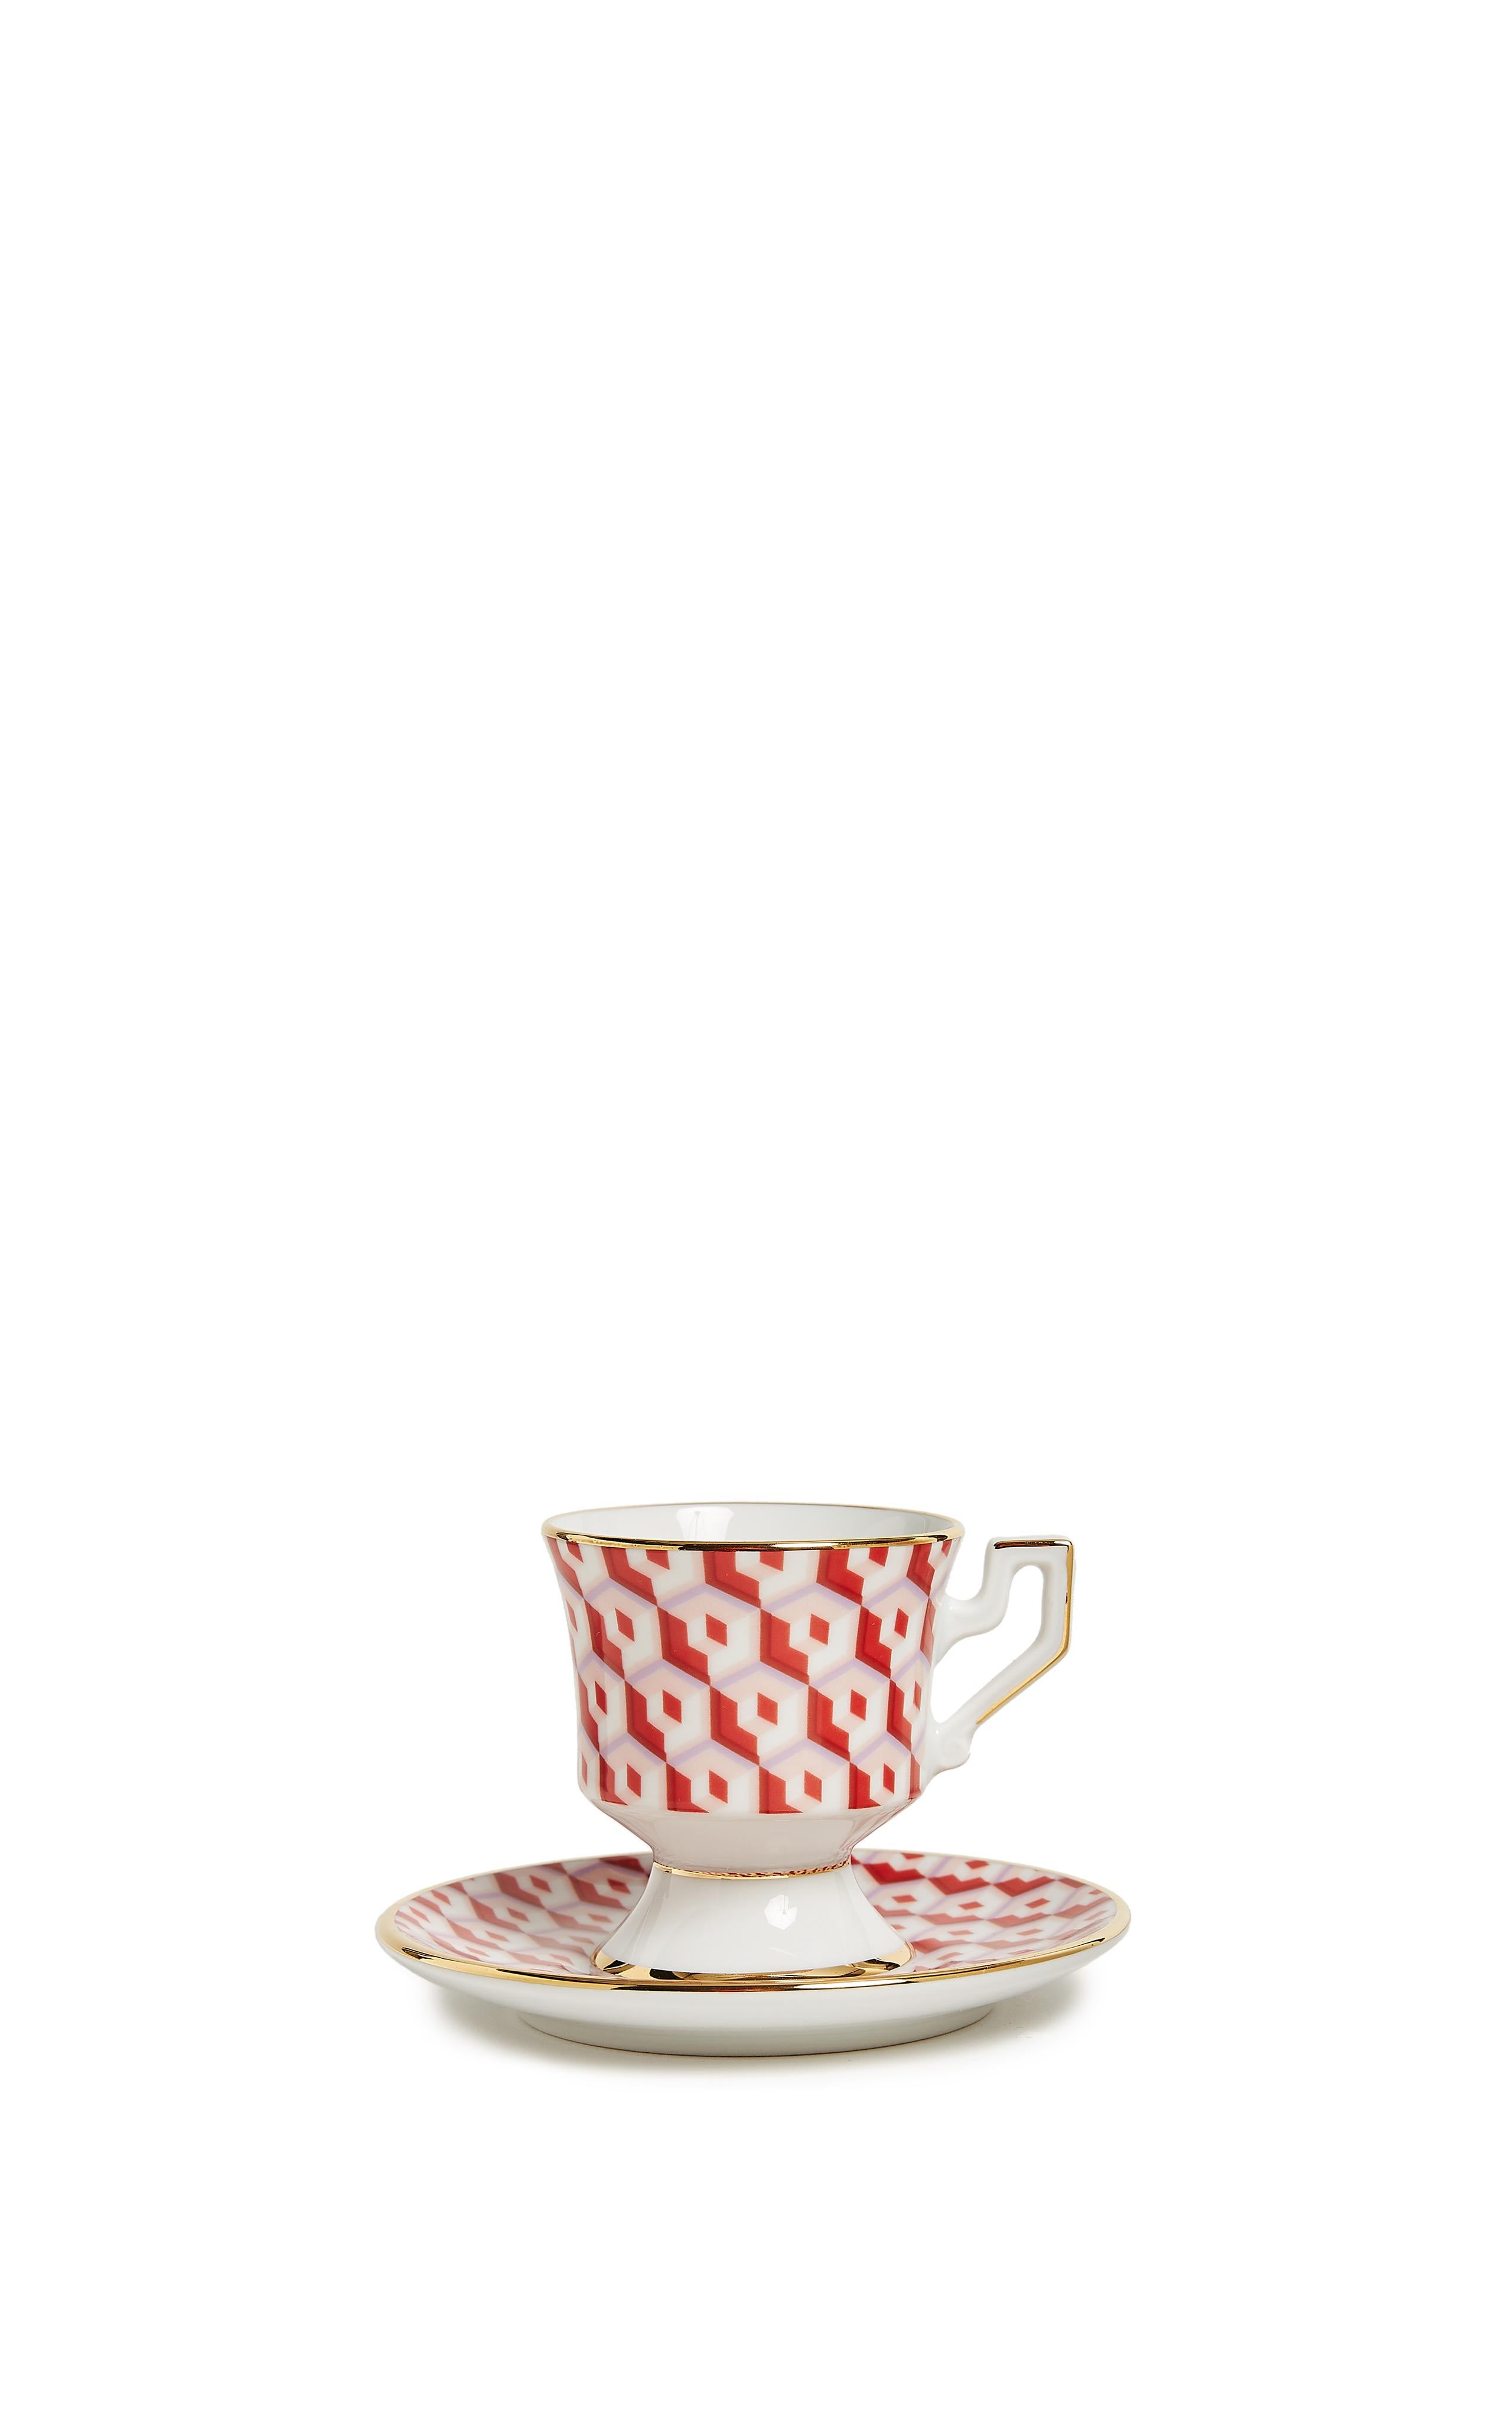 Italian Espresso Cup Set of 2, Cubi Rosso Print, 100% Porcelain by La DoubleJ